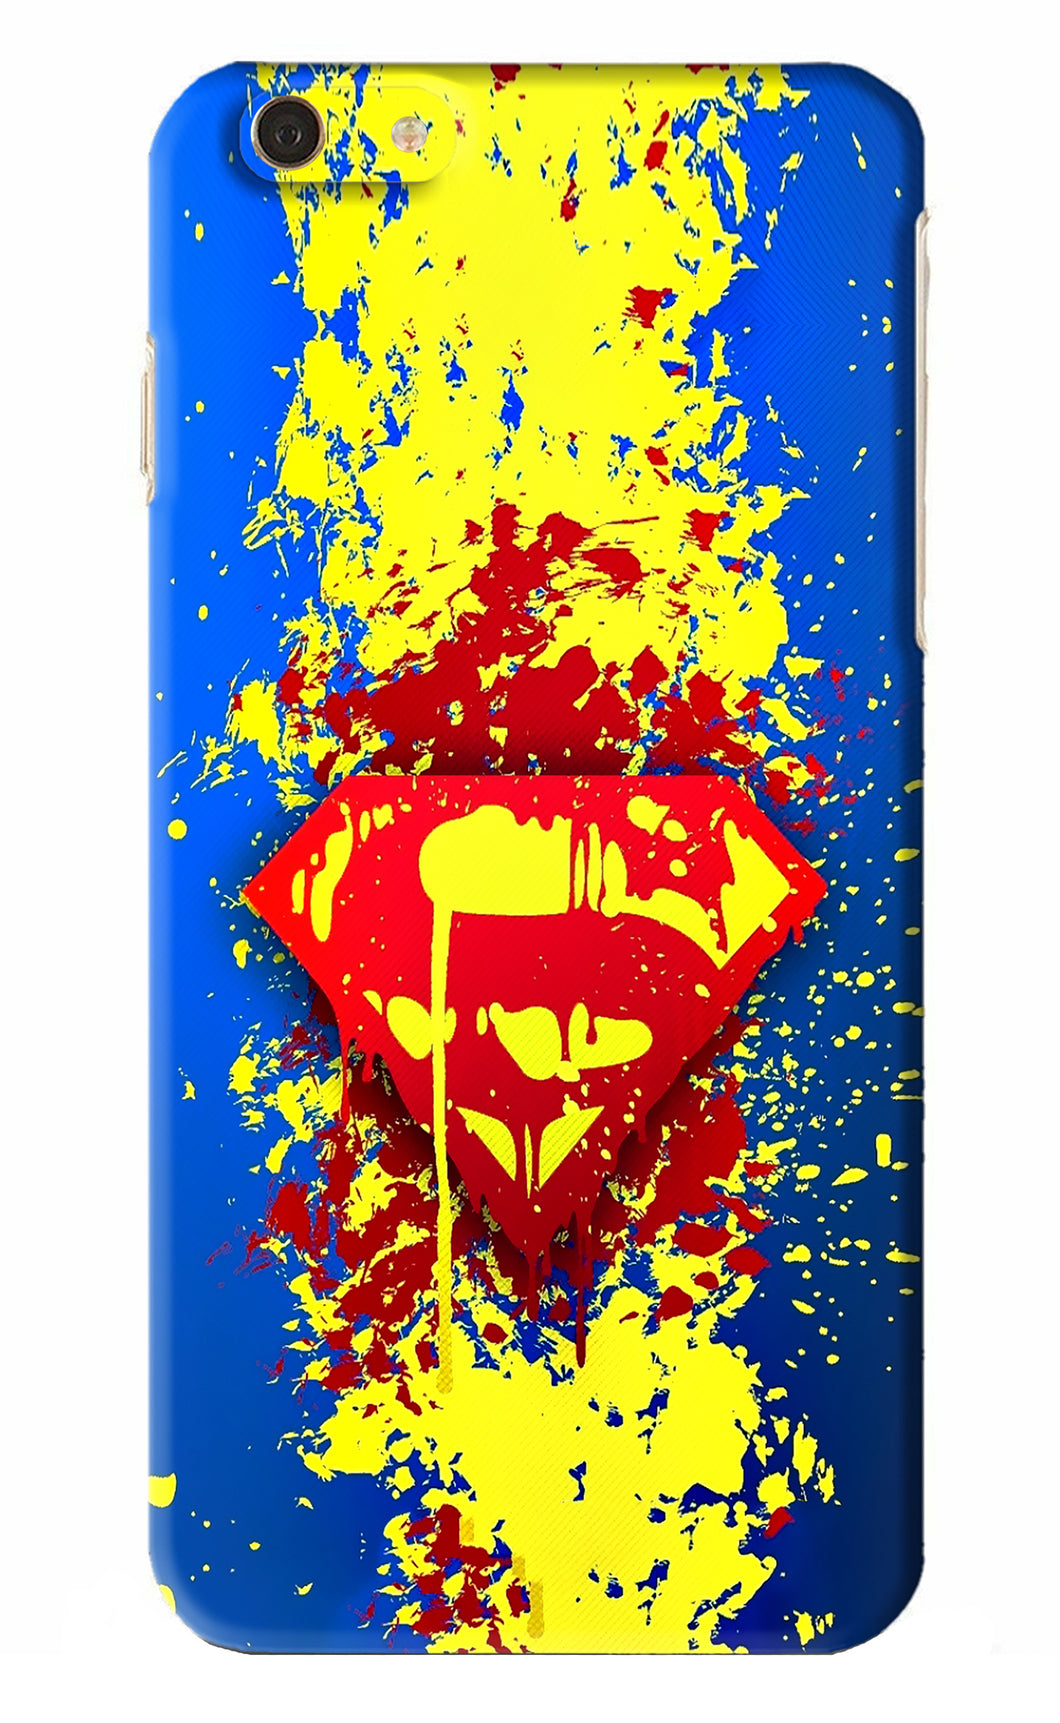 Superman logo iPhone 6 Plus Back Skin Wrap